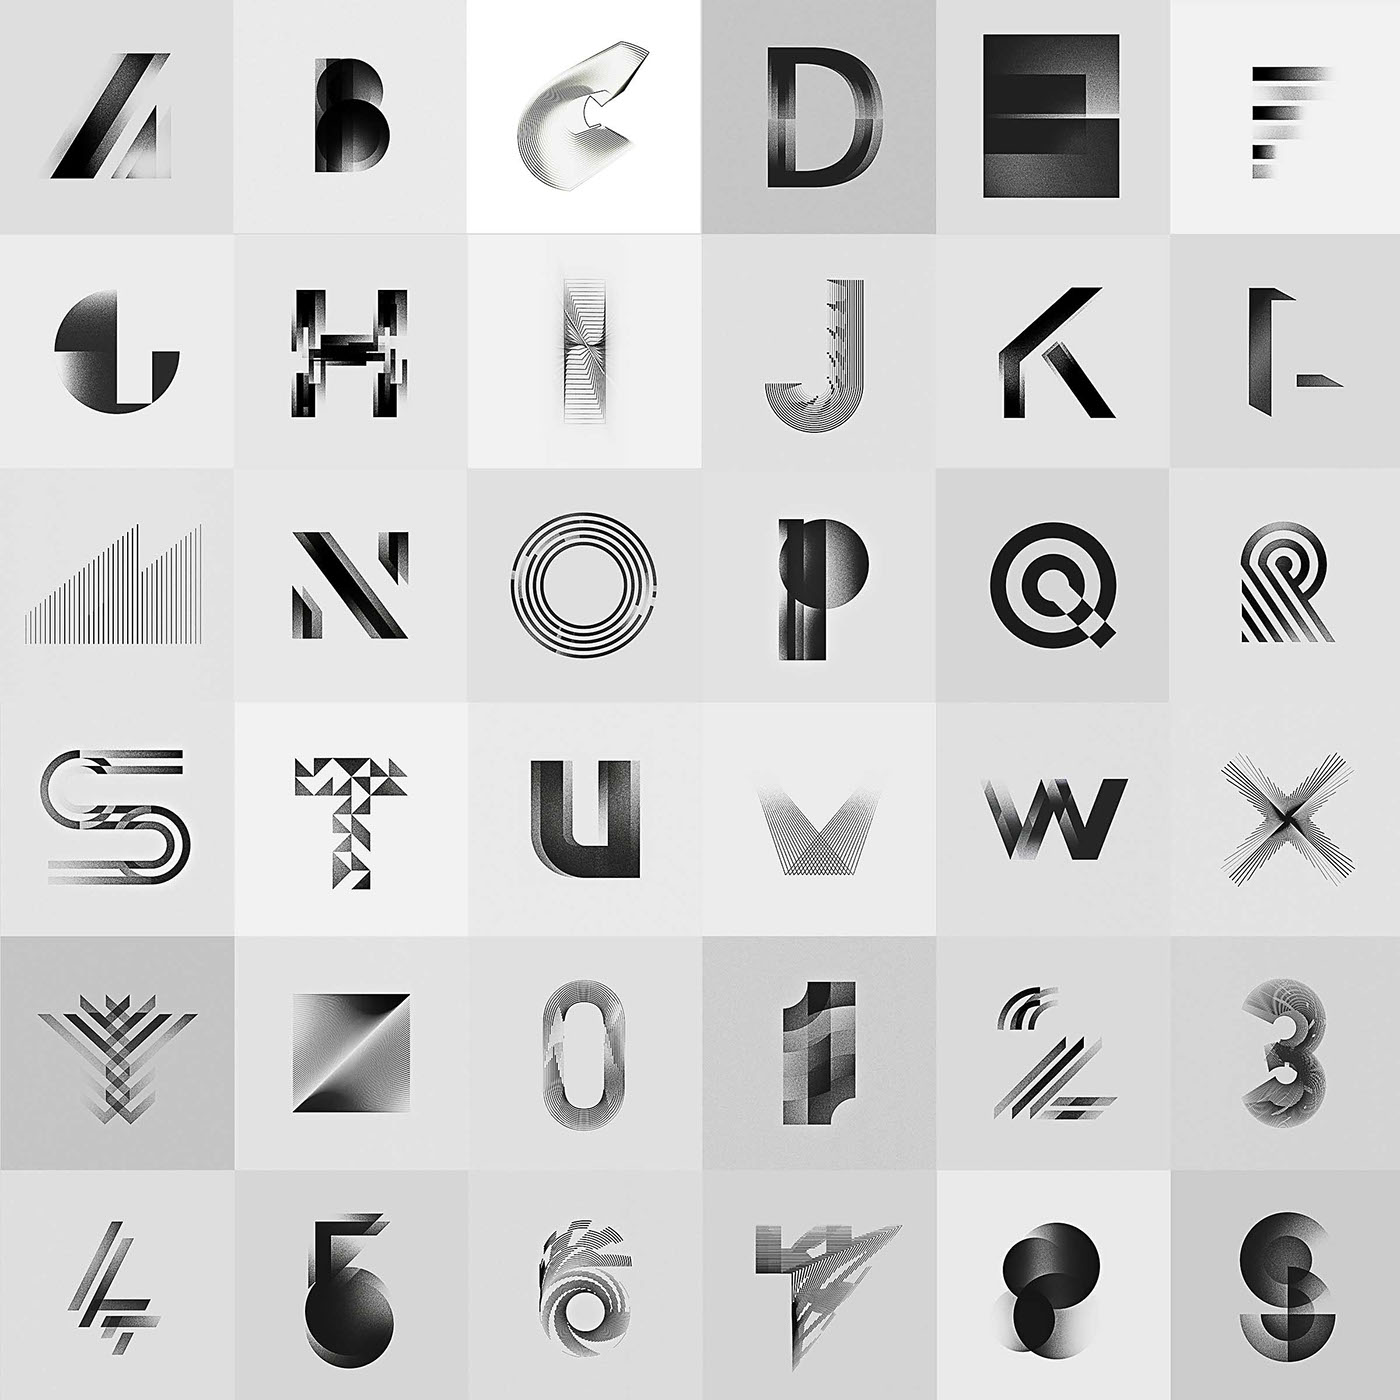 instagram type typedesign 36daysoftype exploration Experimentation social media